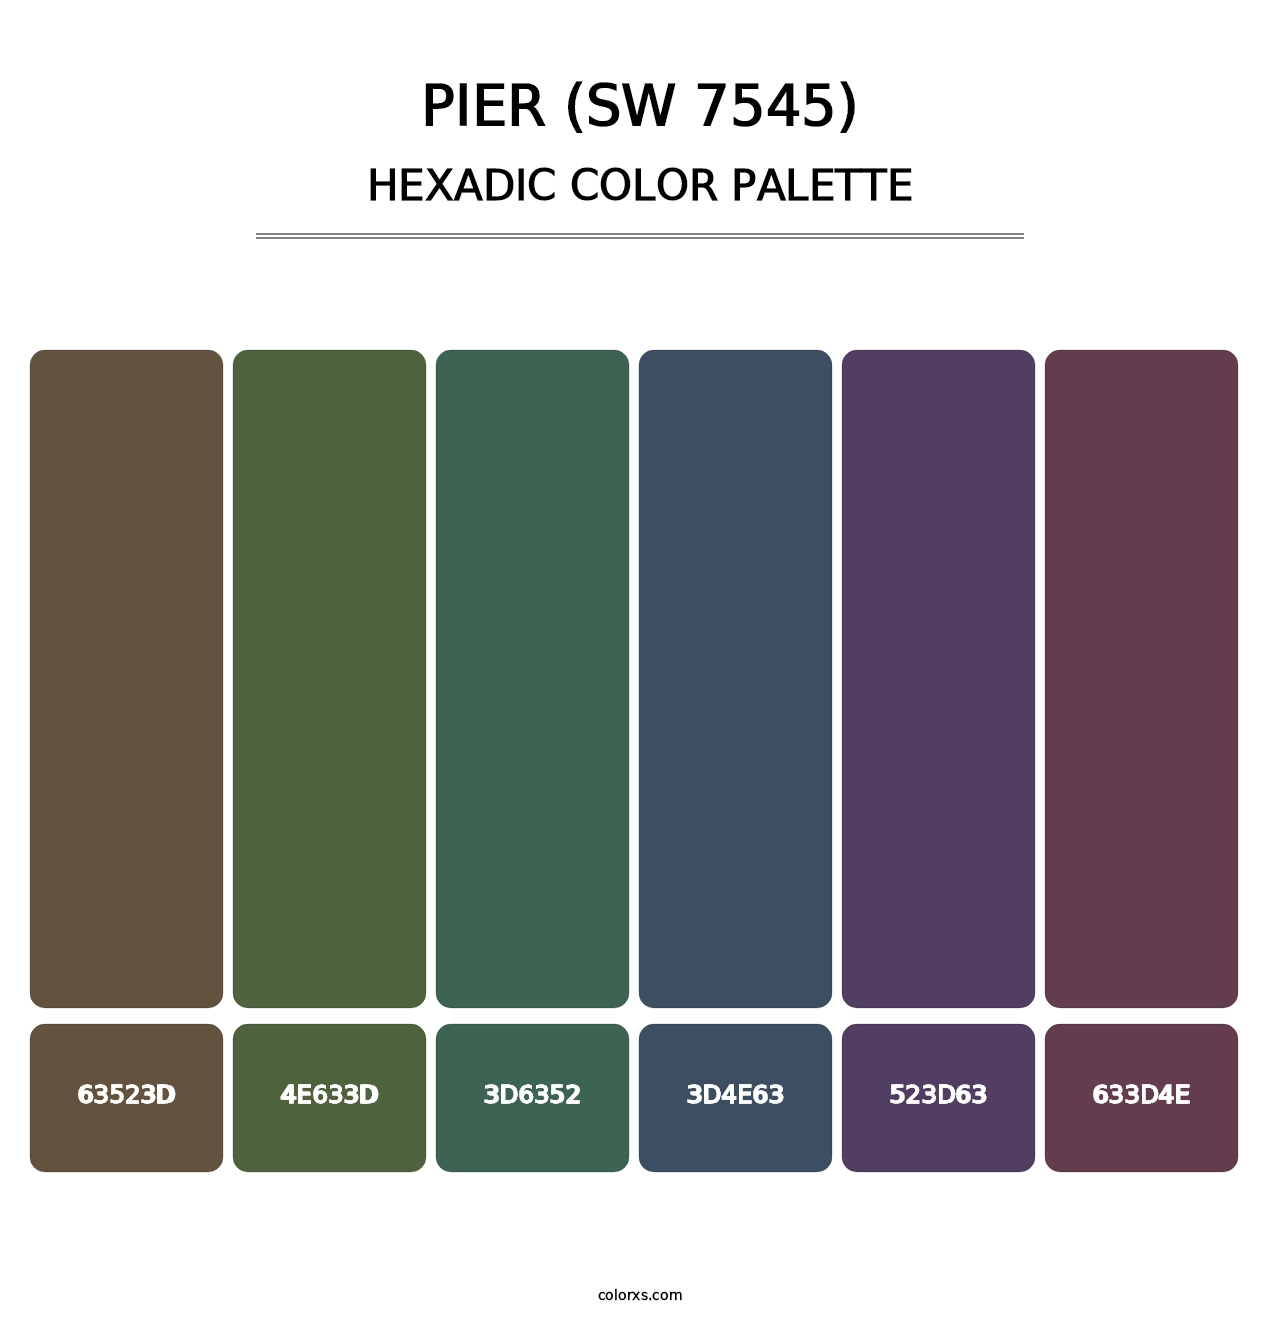 Pier (SW 7545) - Hexadic Color Palette